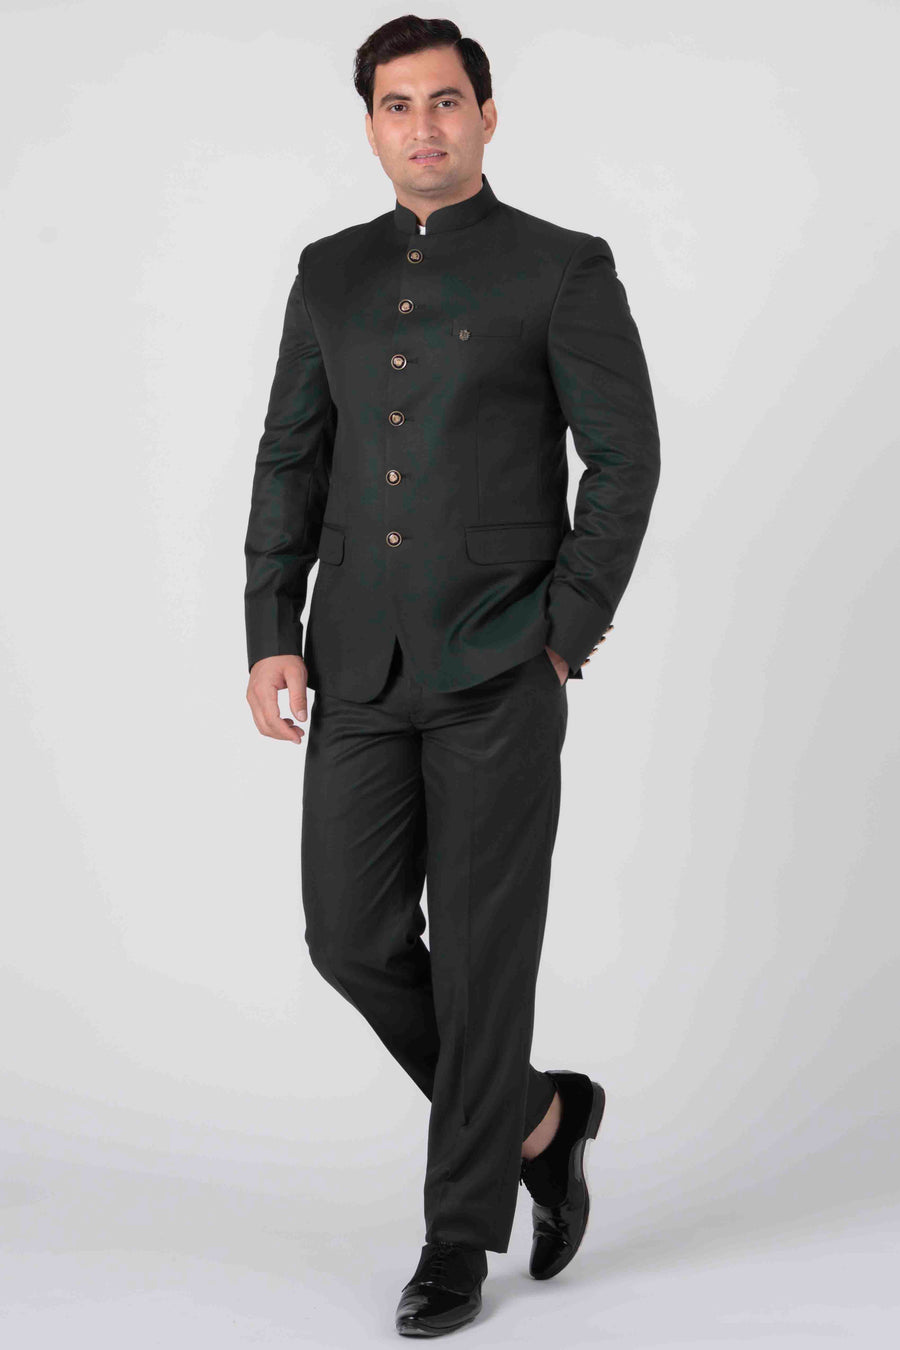 MLS Plain Jodhpuri Suit